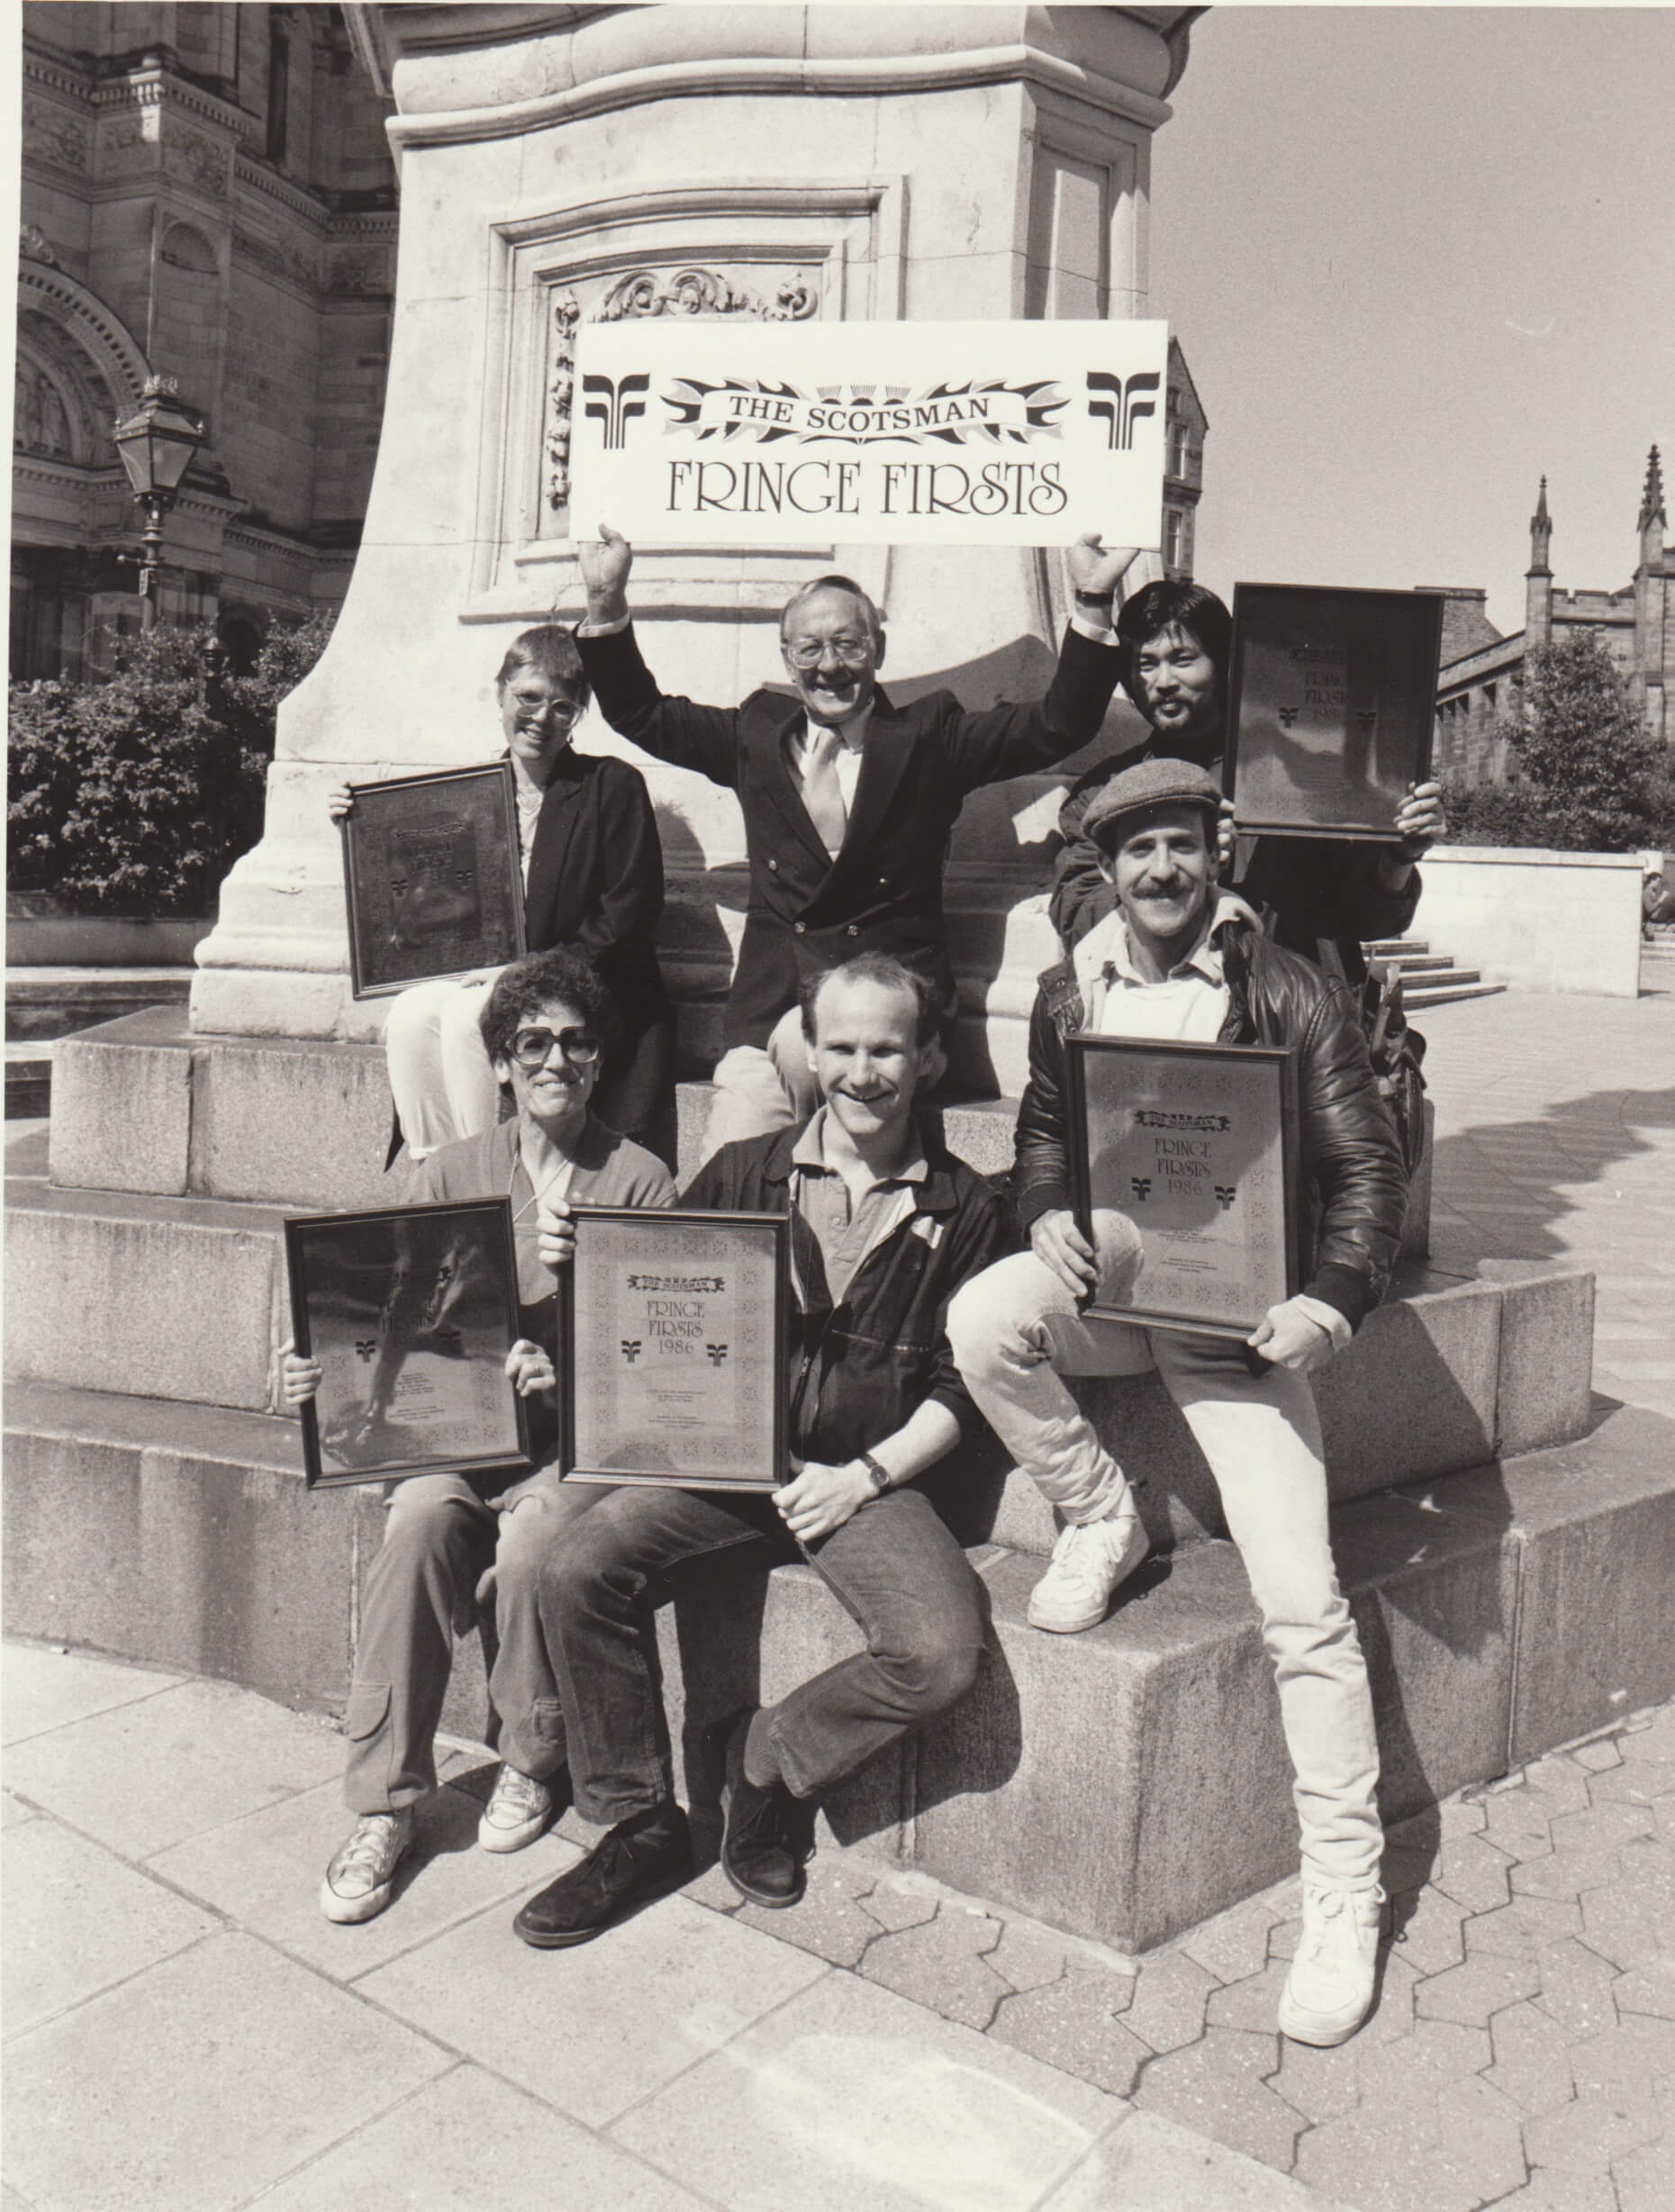 BRIGHTON THEATRE with awards, 1986